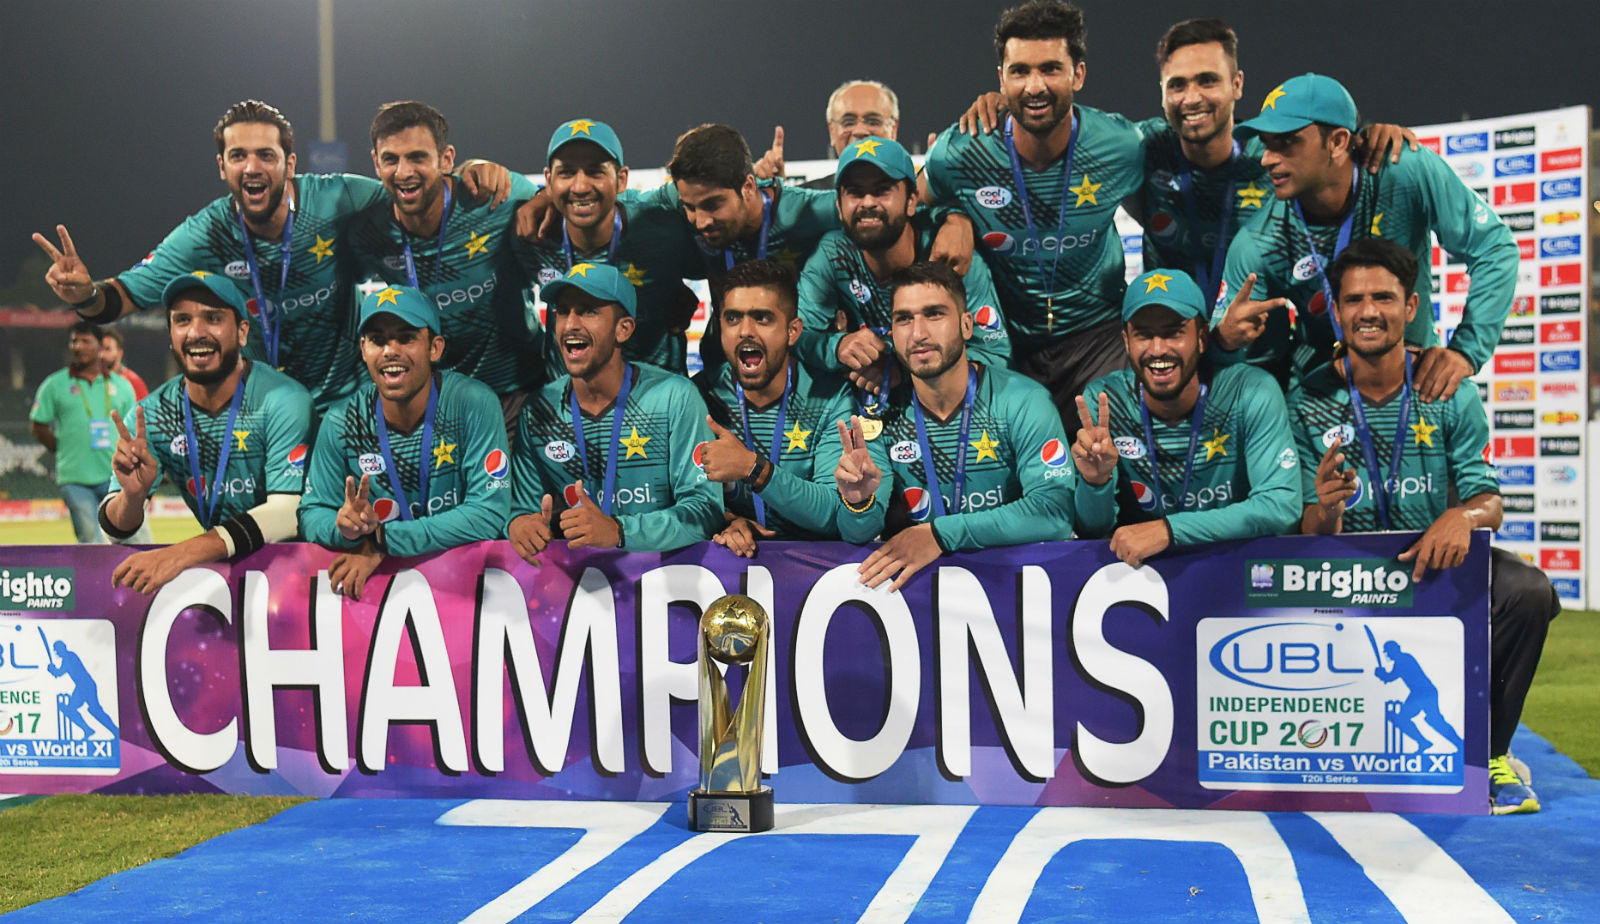 Slideshow: Pakistan vs World XI final 